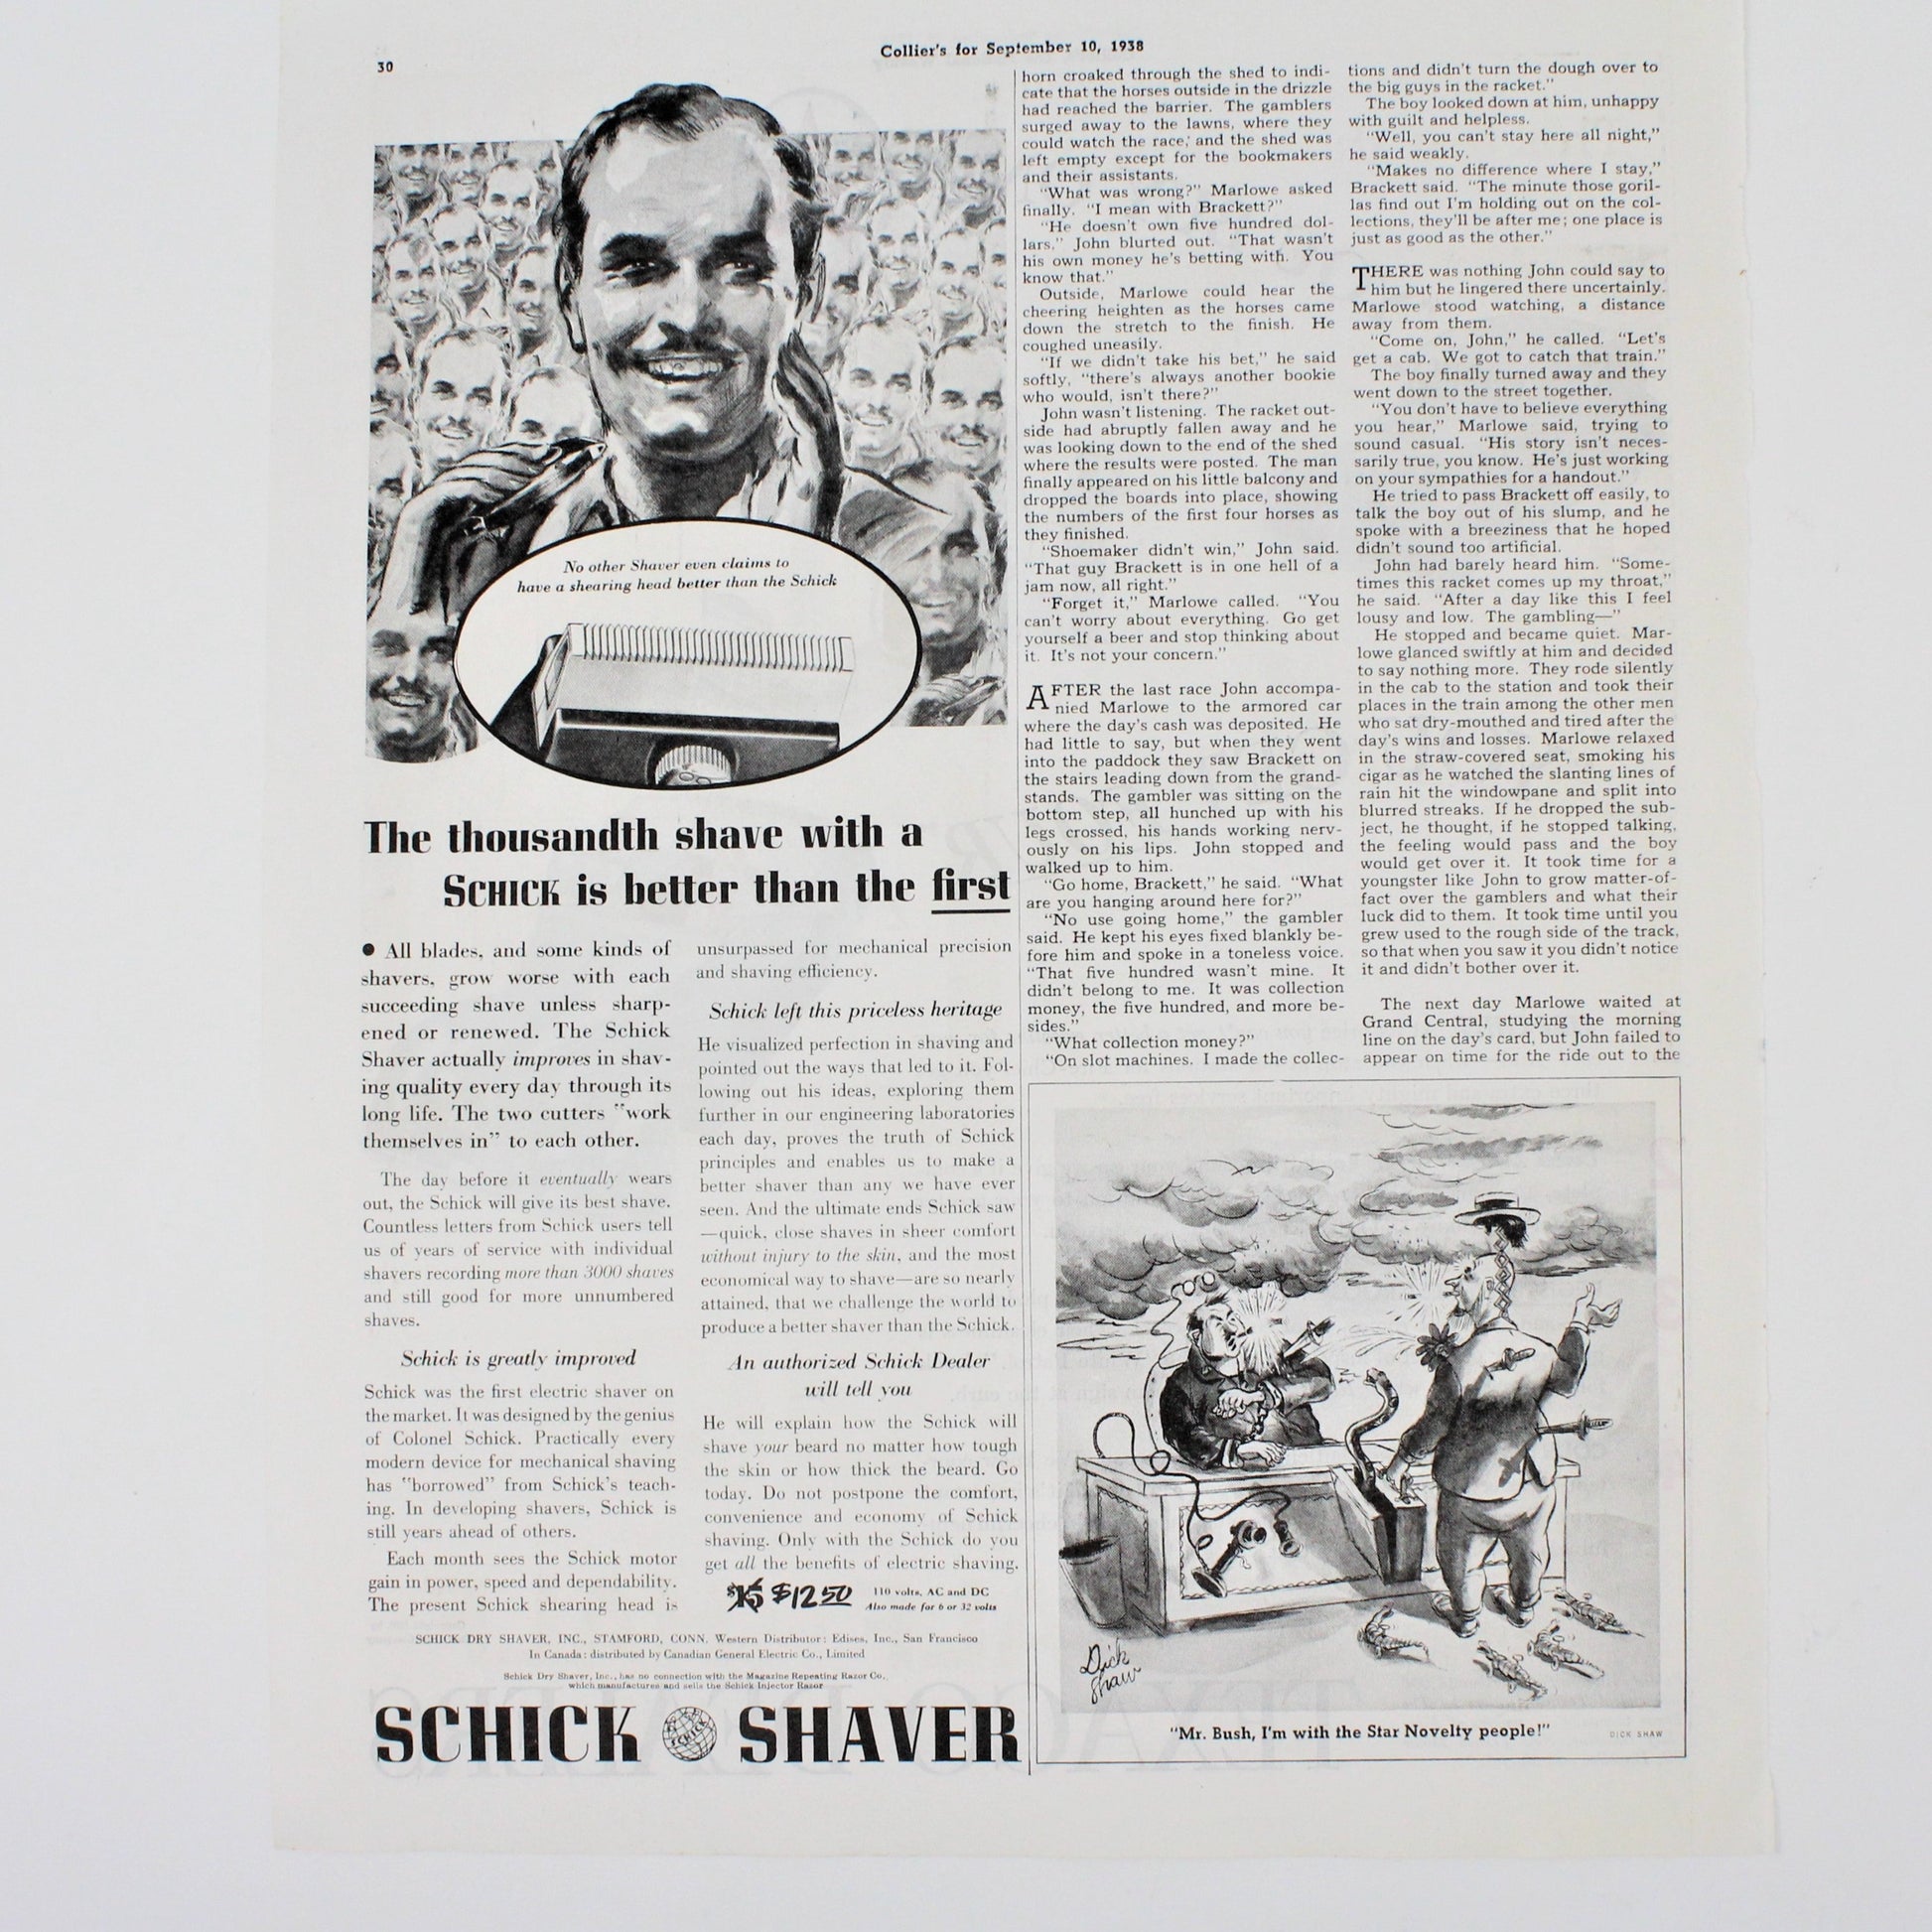 Vintage Schick Shaver advertisement 1938